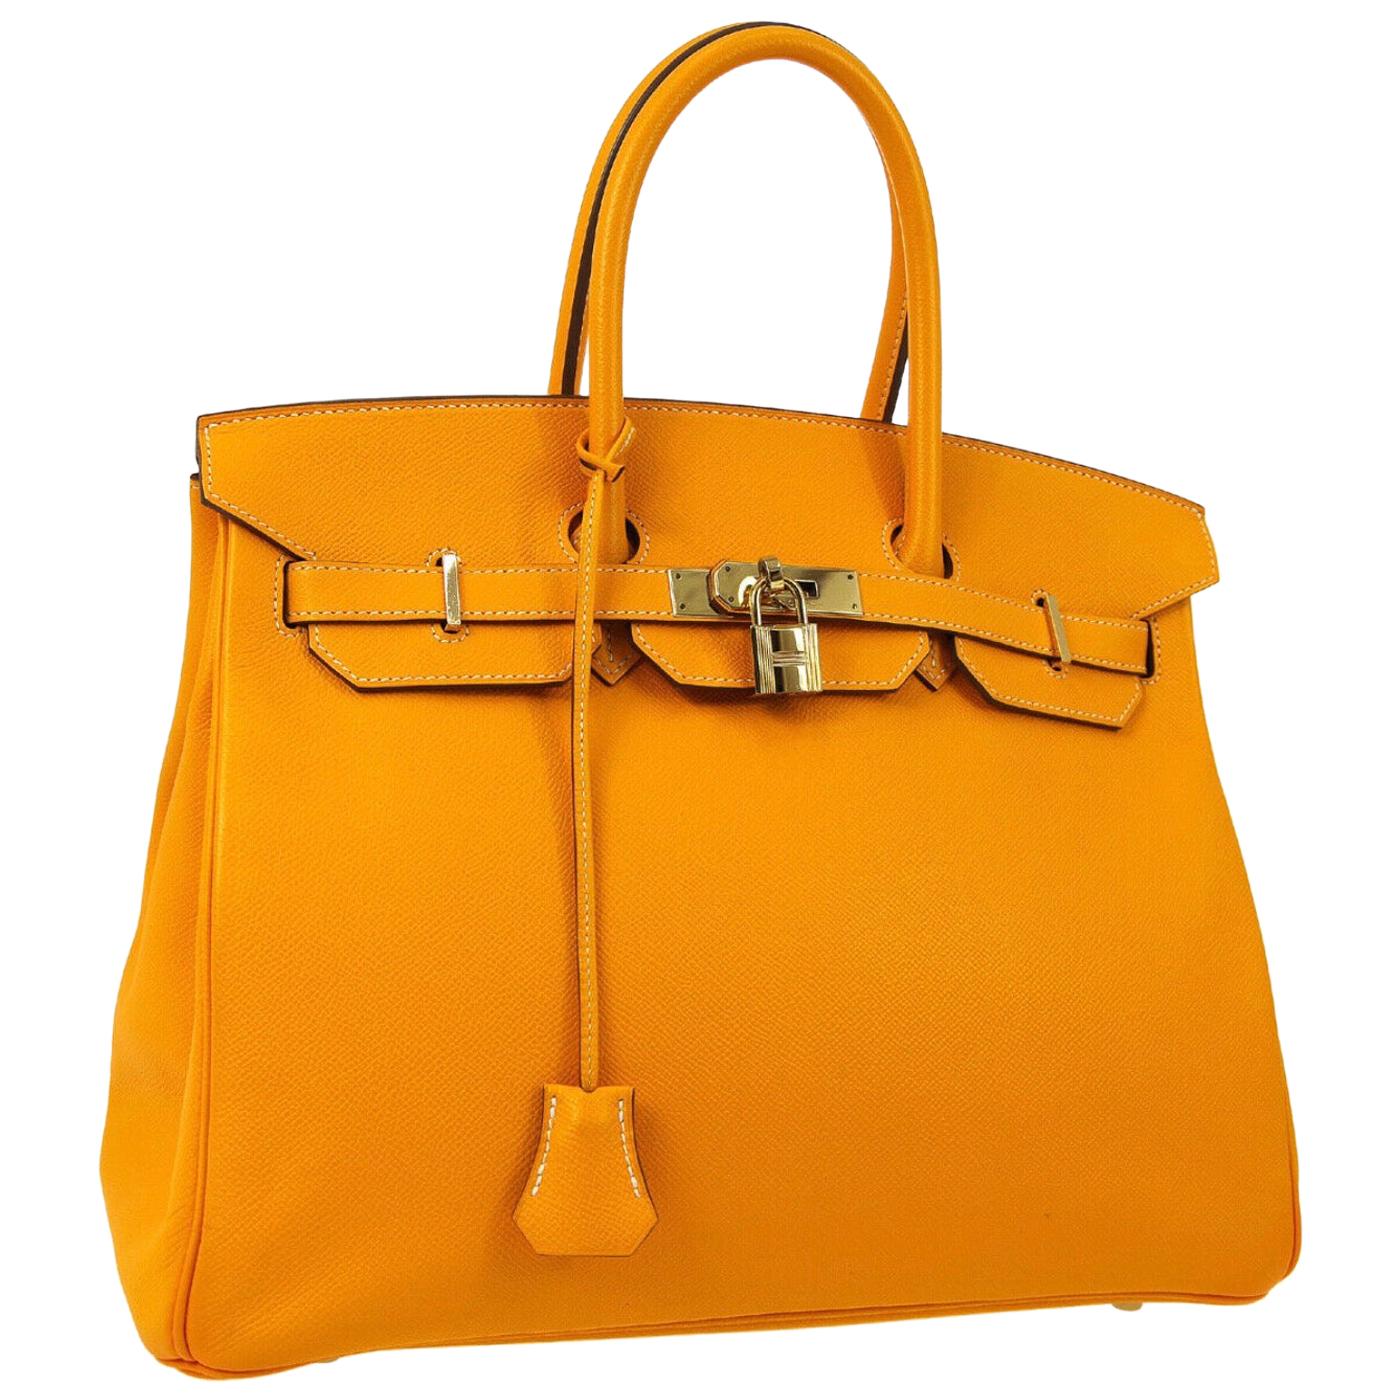 Hermes Birkin 35 Orange Yellow Limited Edition Gold Top Handle Satchel Tote Bag